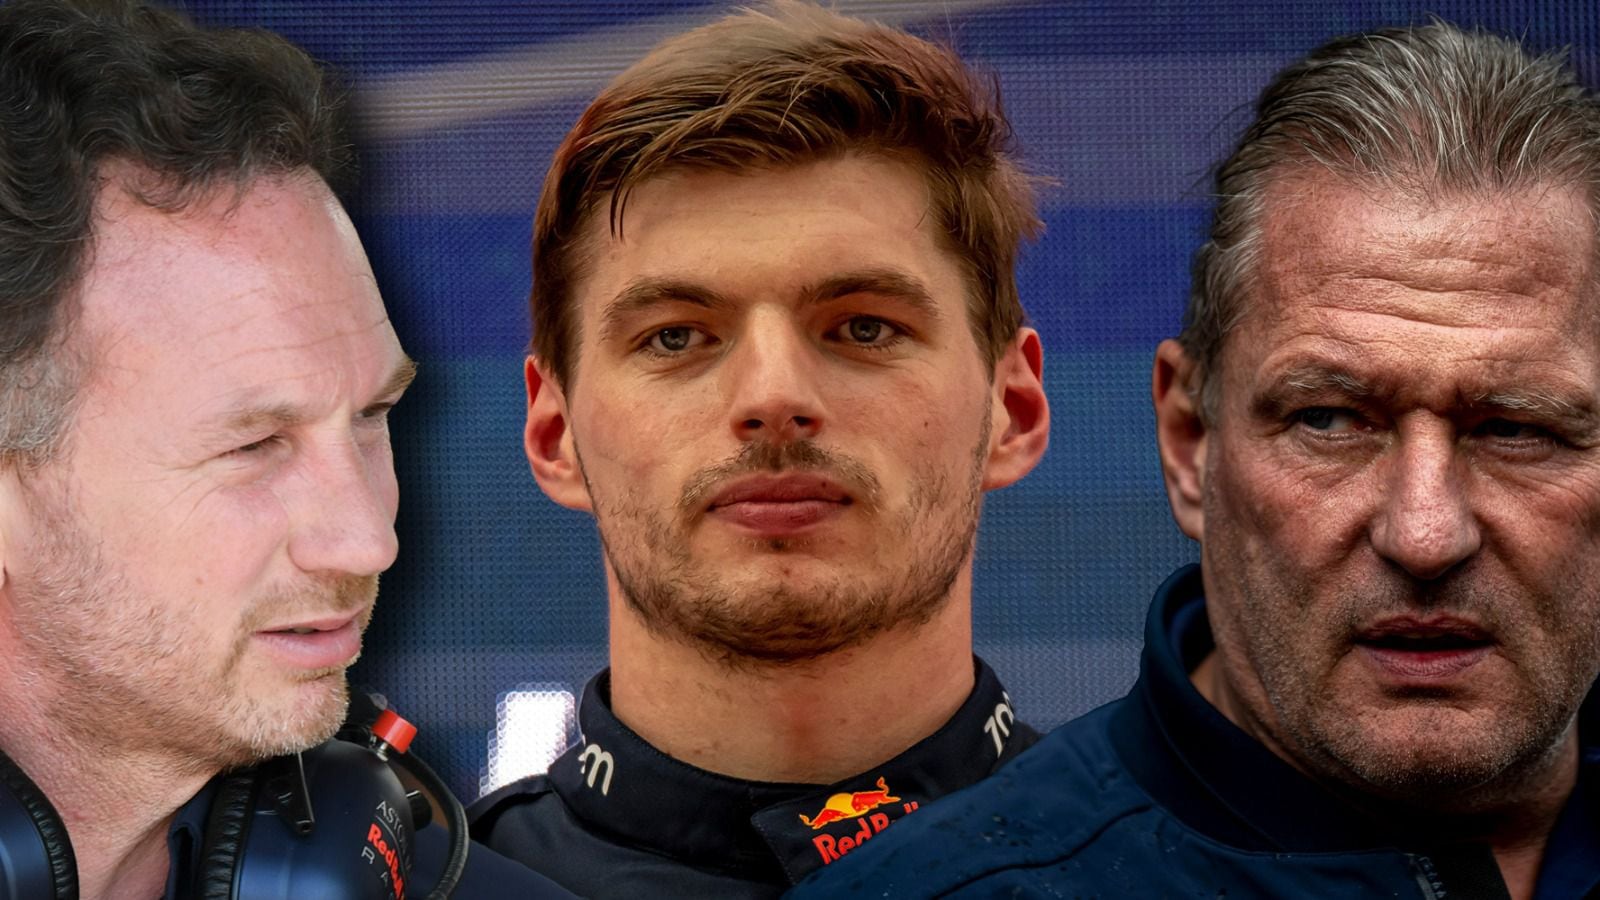 Christian Horner, directivo de Red Bull, enfrentó una investigación por comportamiento adecuado.